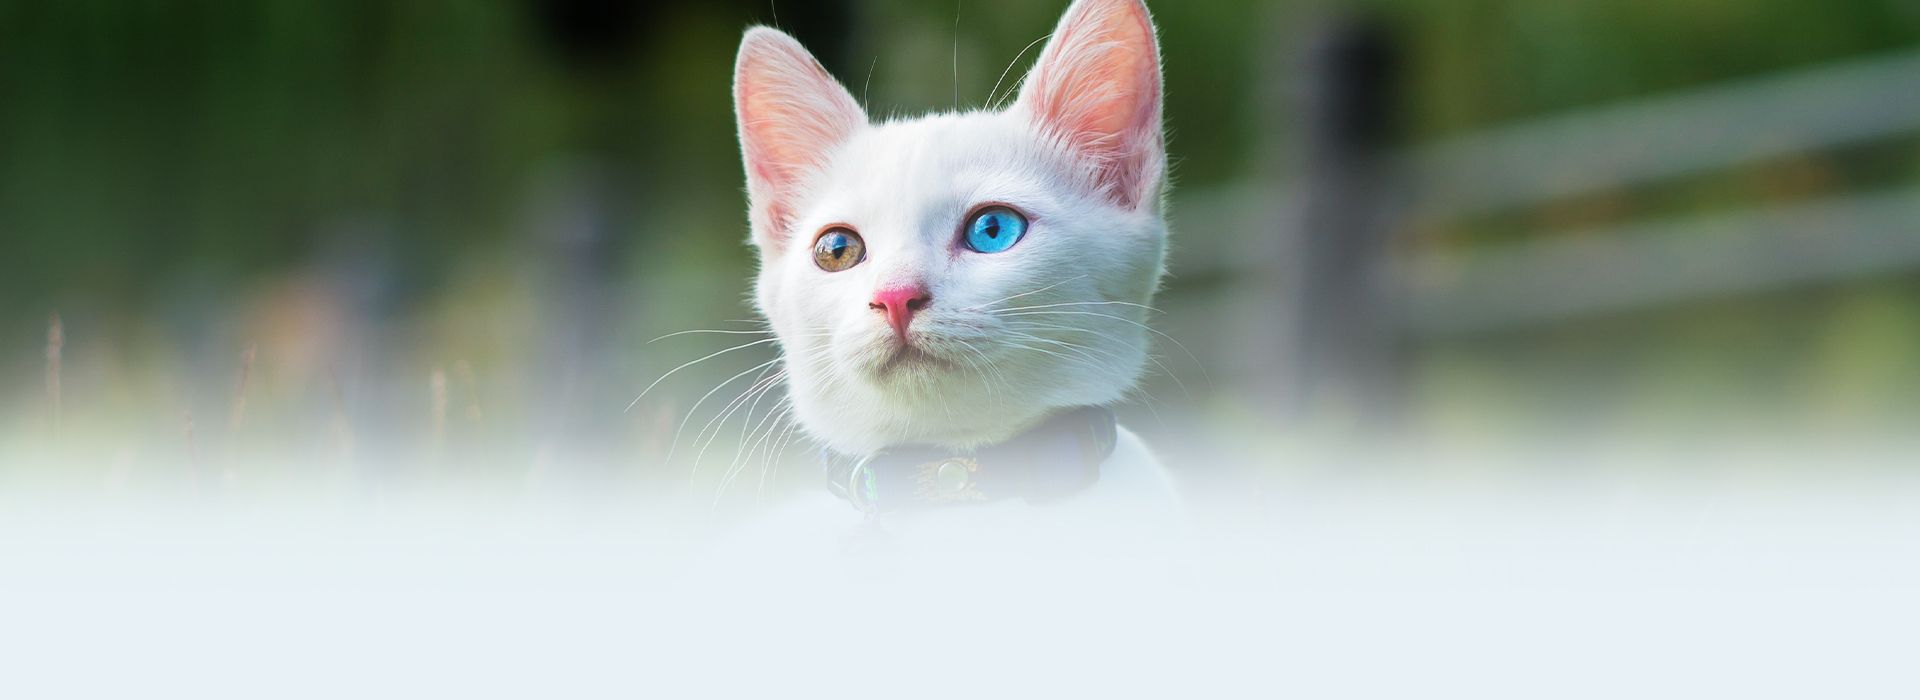 beautiful white kitten among green grass